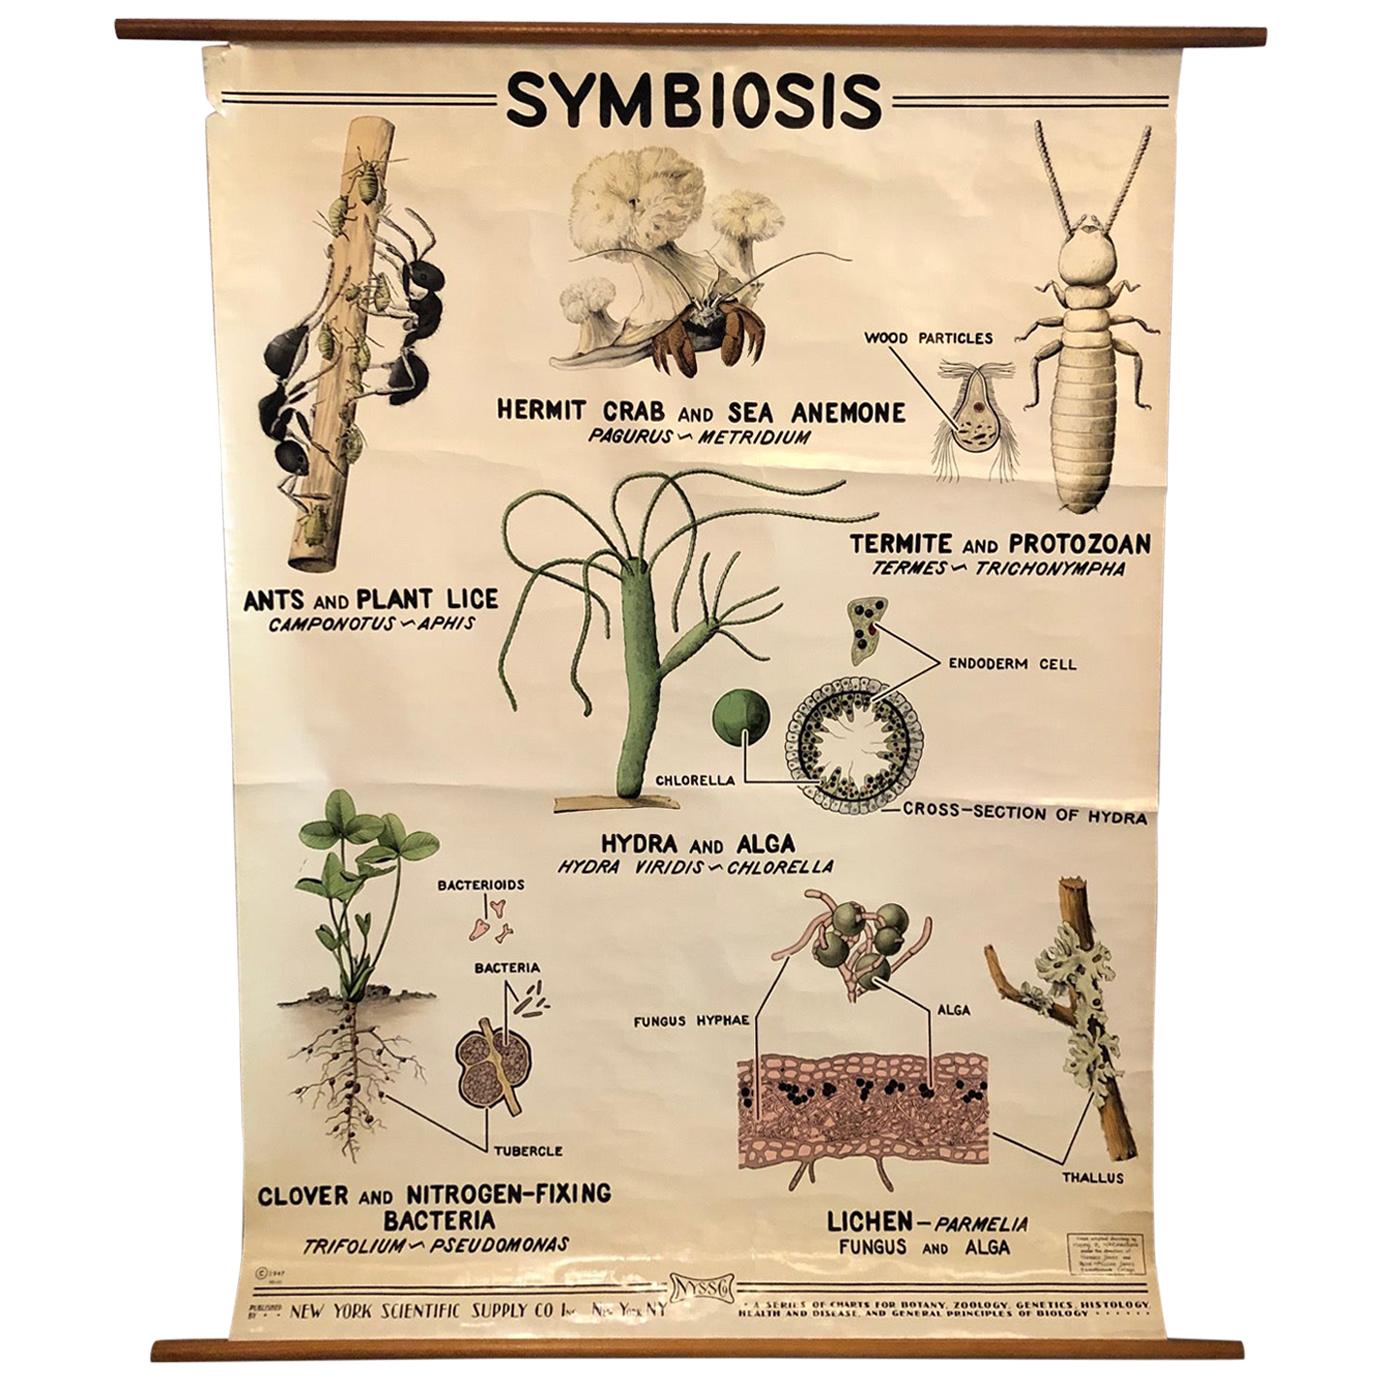 Tableau mural de la symbiose zoologique éducative de New York Scientific Supply Co